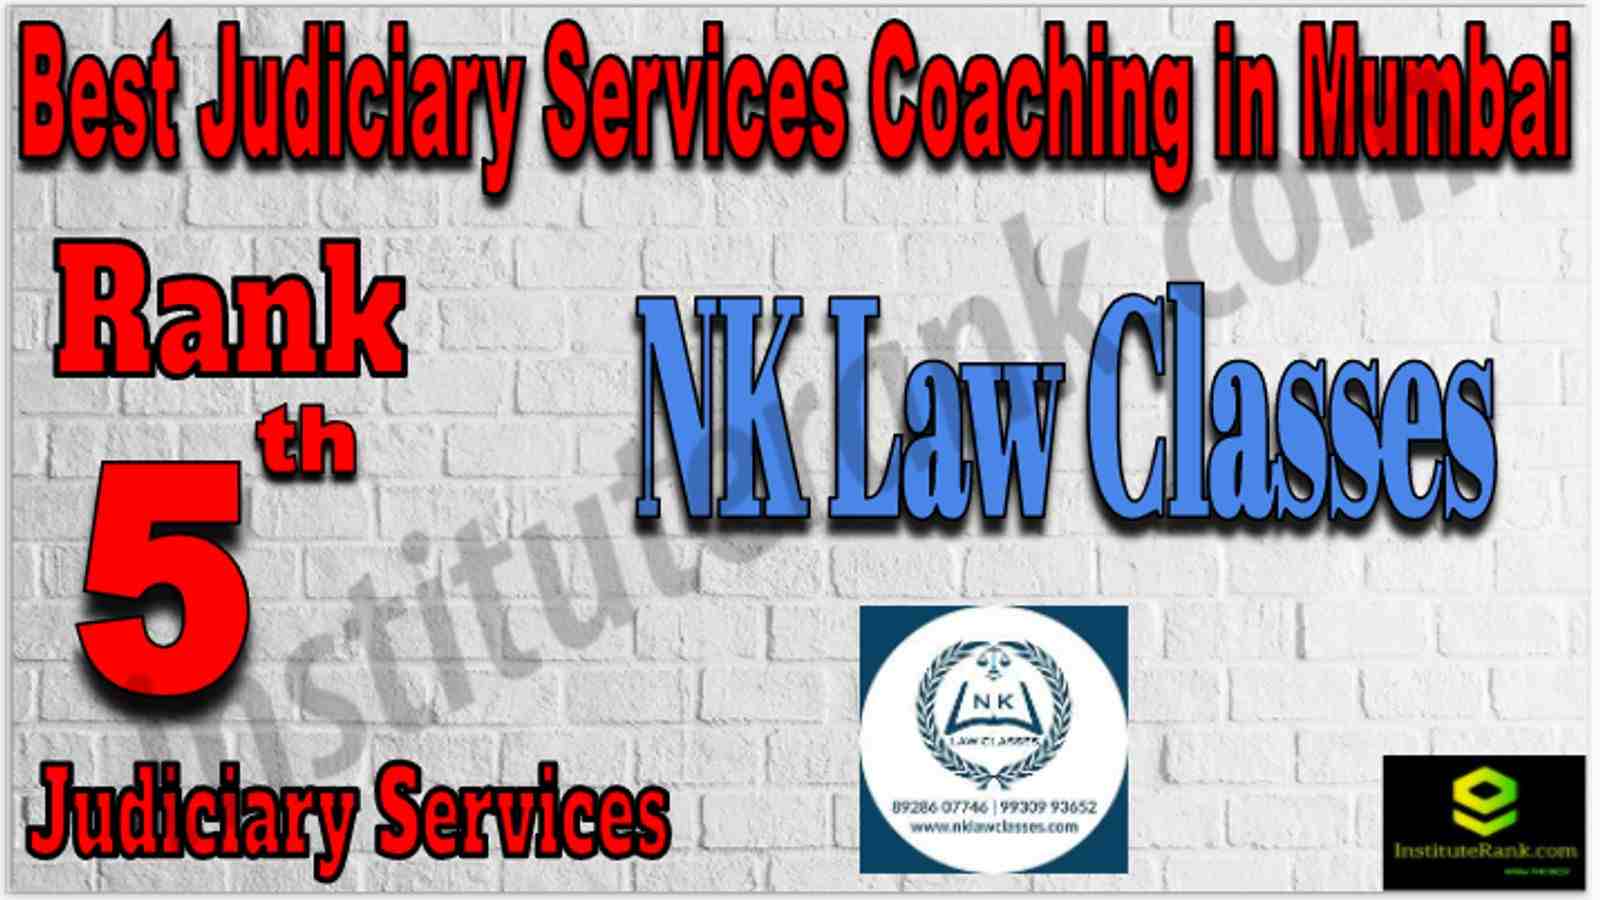 Rank 4 Best Judiciary Services Coaching in Mumbai